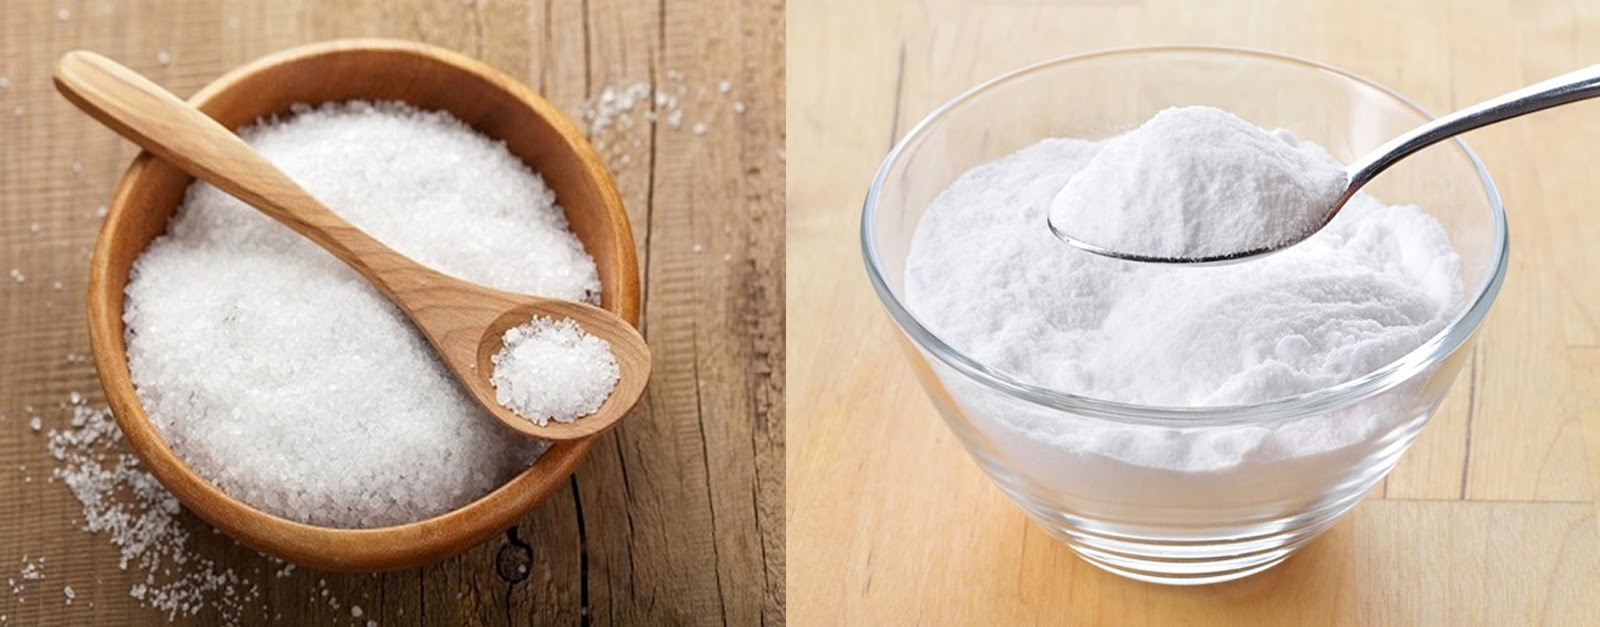 Garam dan Baking Soda - Panduan Cara Memutihkan Gigi dengan Garam